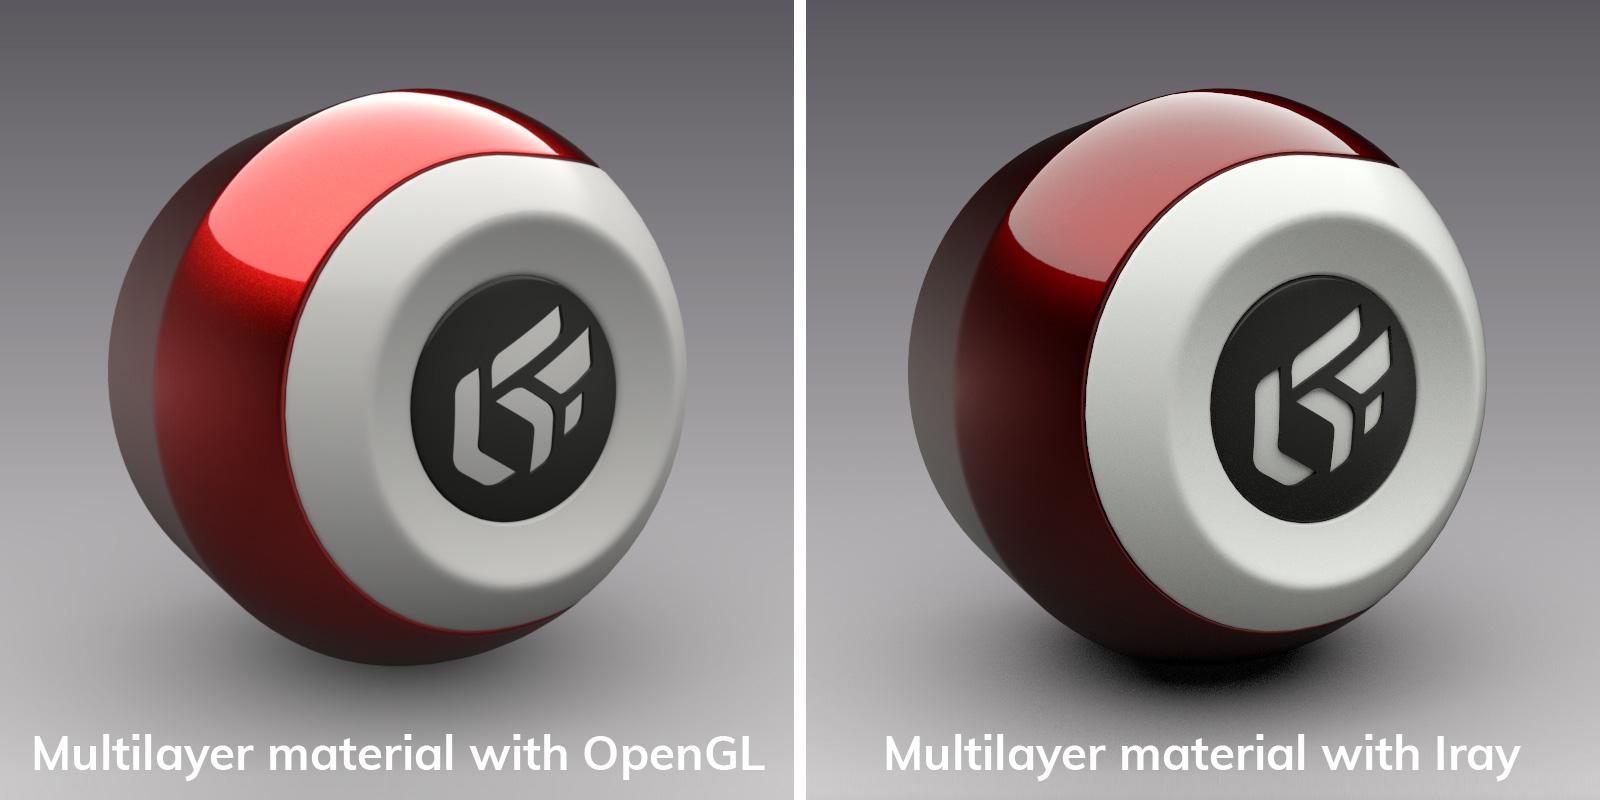 Multilayer material rendering comparison